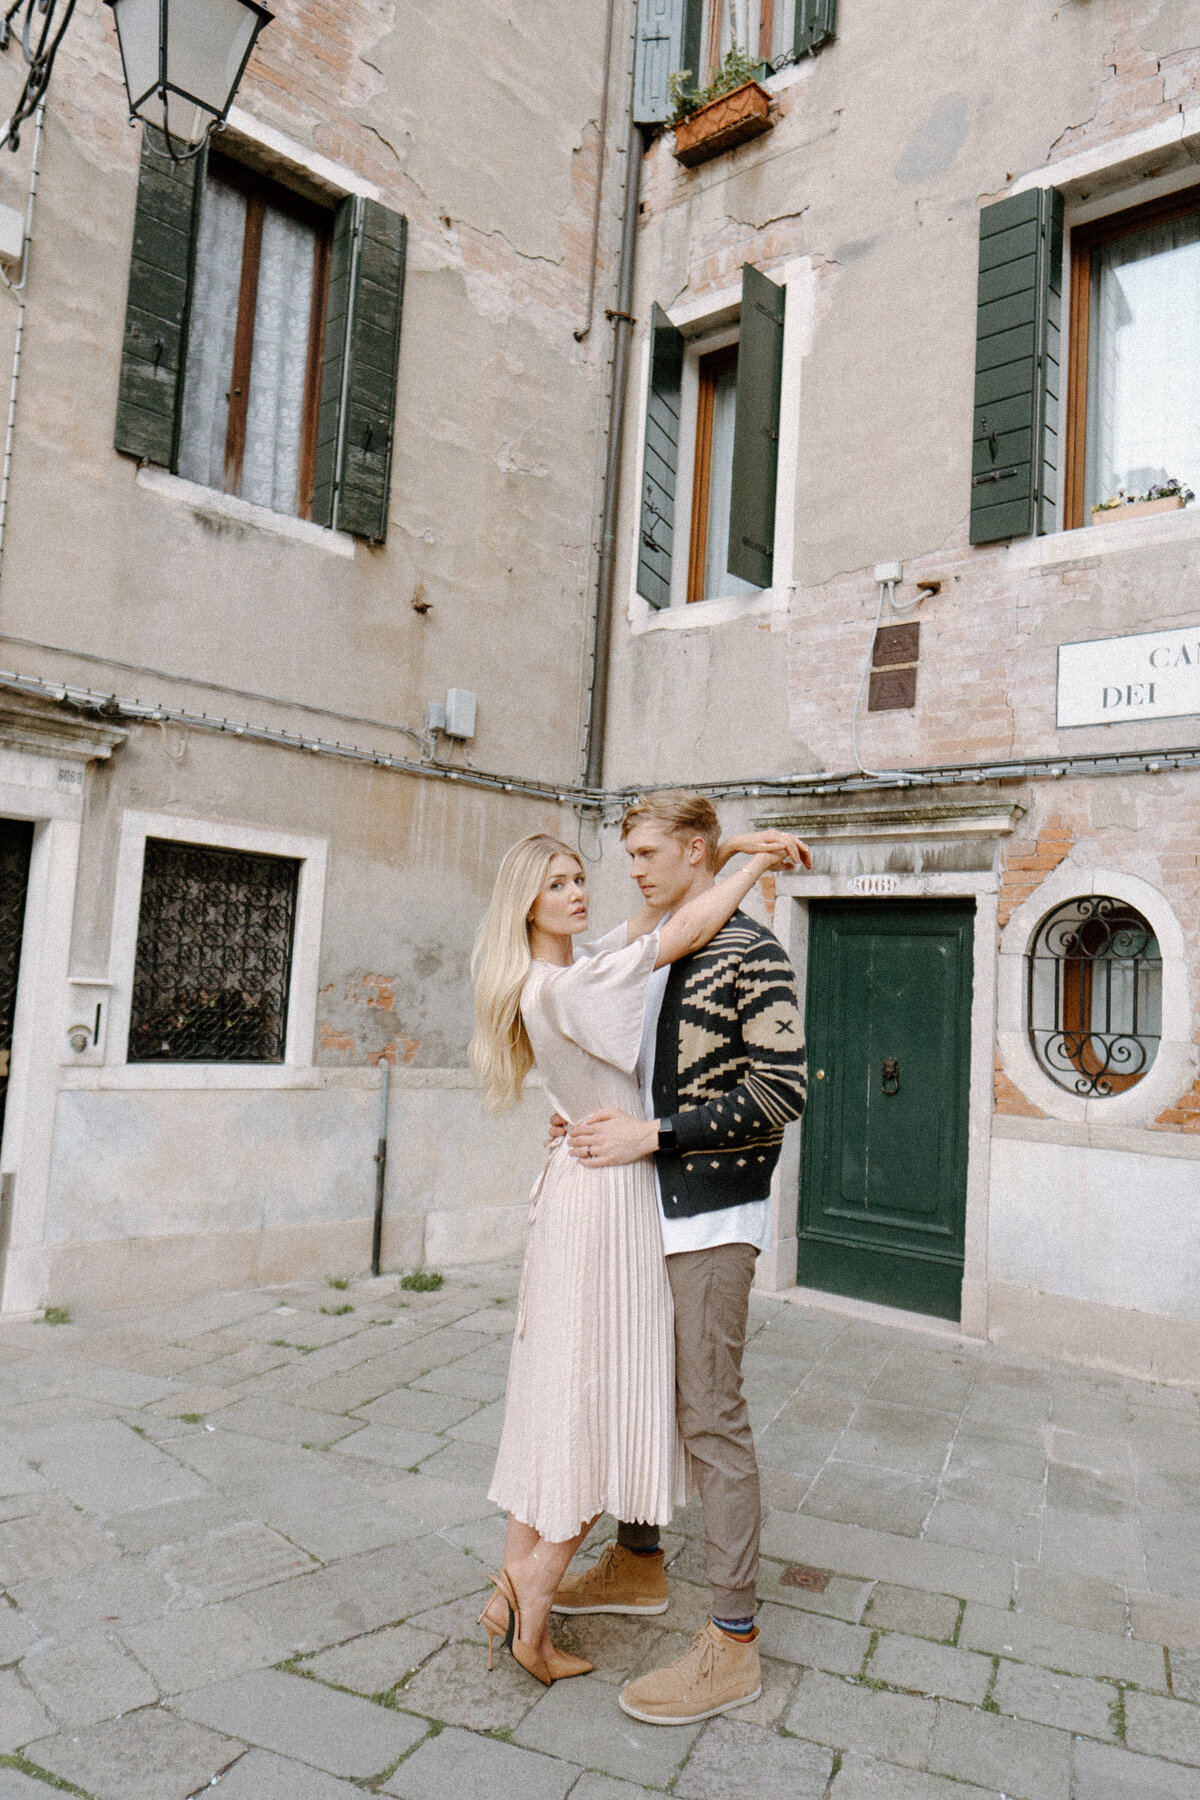 Documentary-Style-Editorial-Vogue-Italy-Destination-Wedding-Leah-Gunn-Photography-18